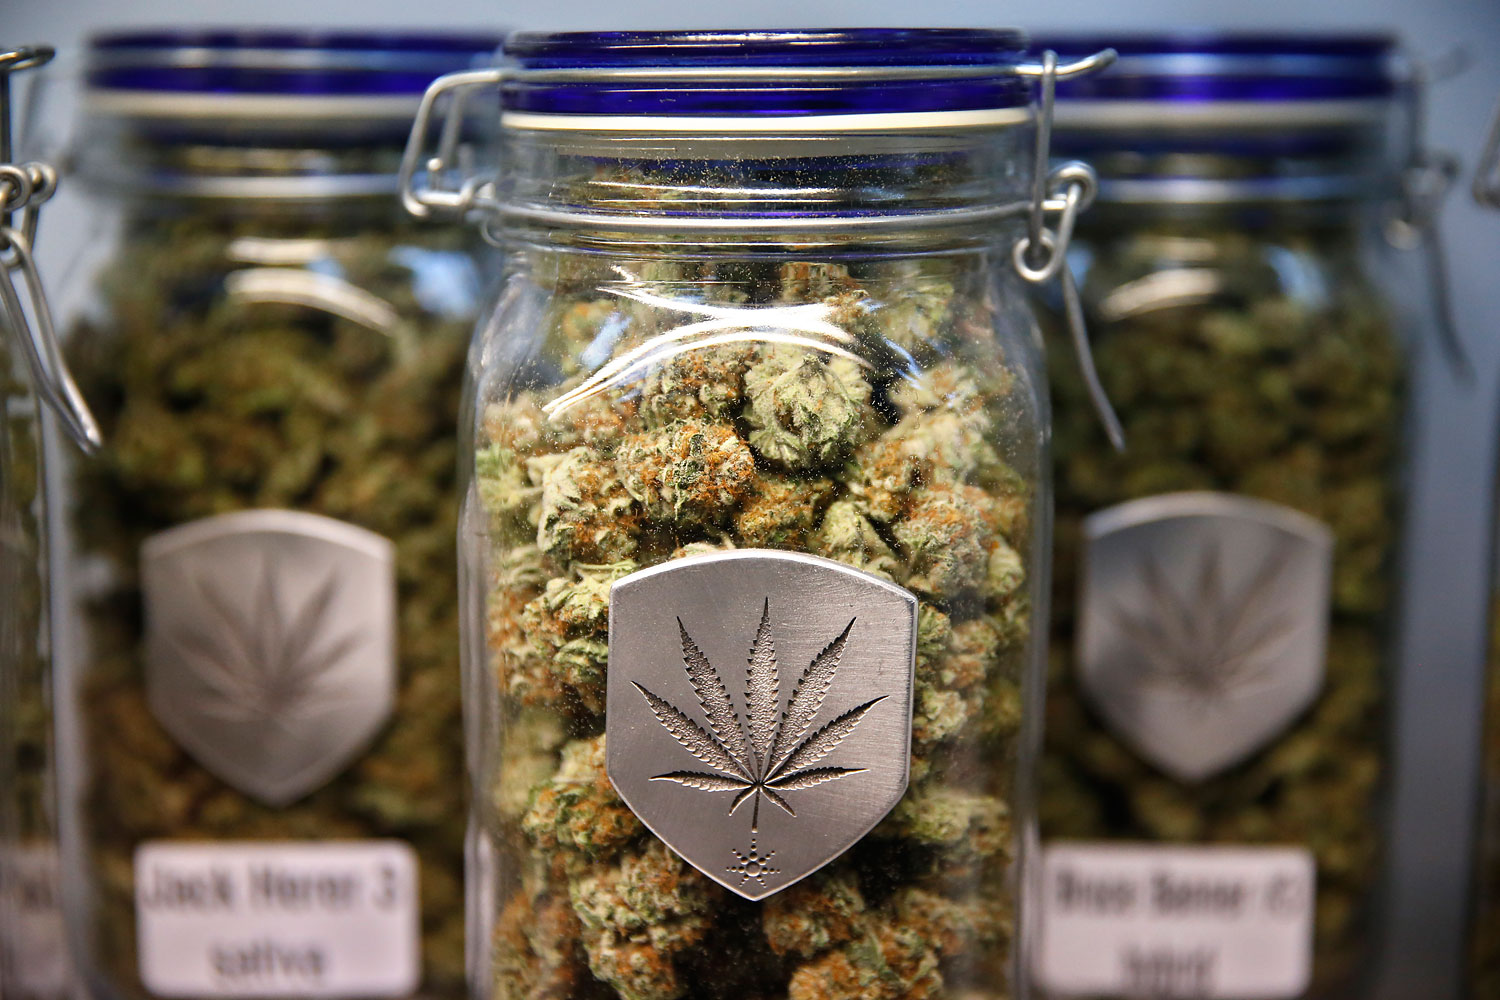 Different strains of pot are displayed for sale at Medicine Man marijuana dispensary in Denver on Dec. 27, 2013.